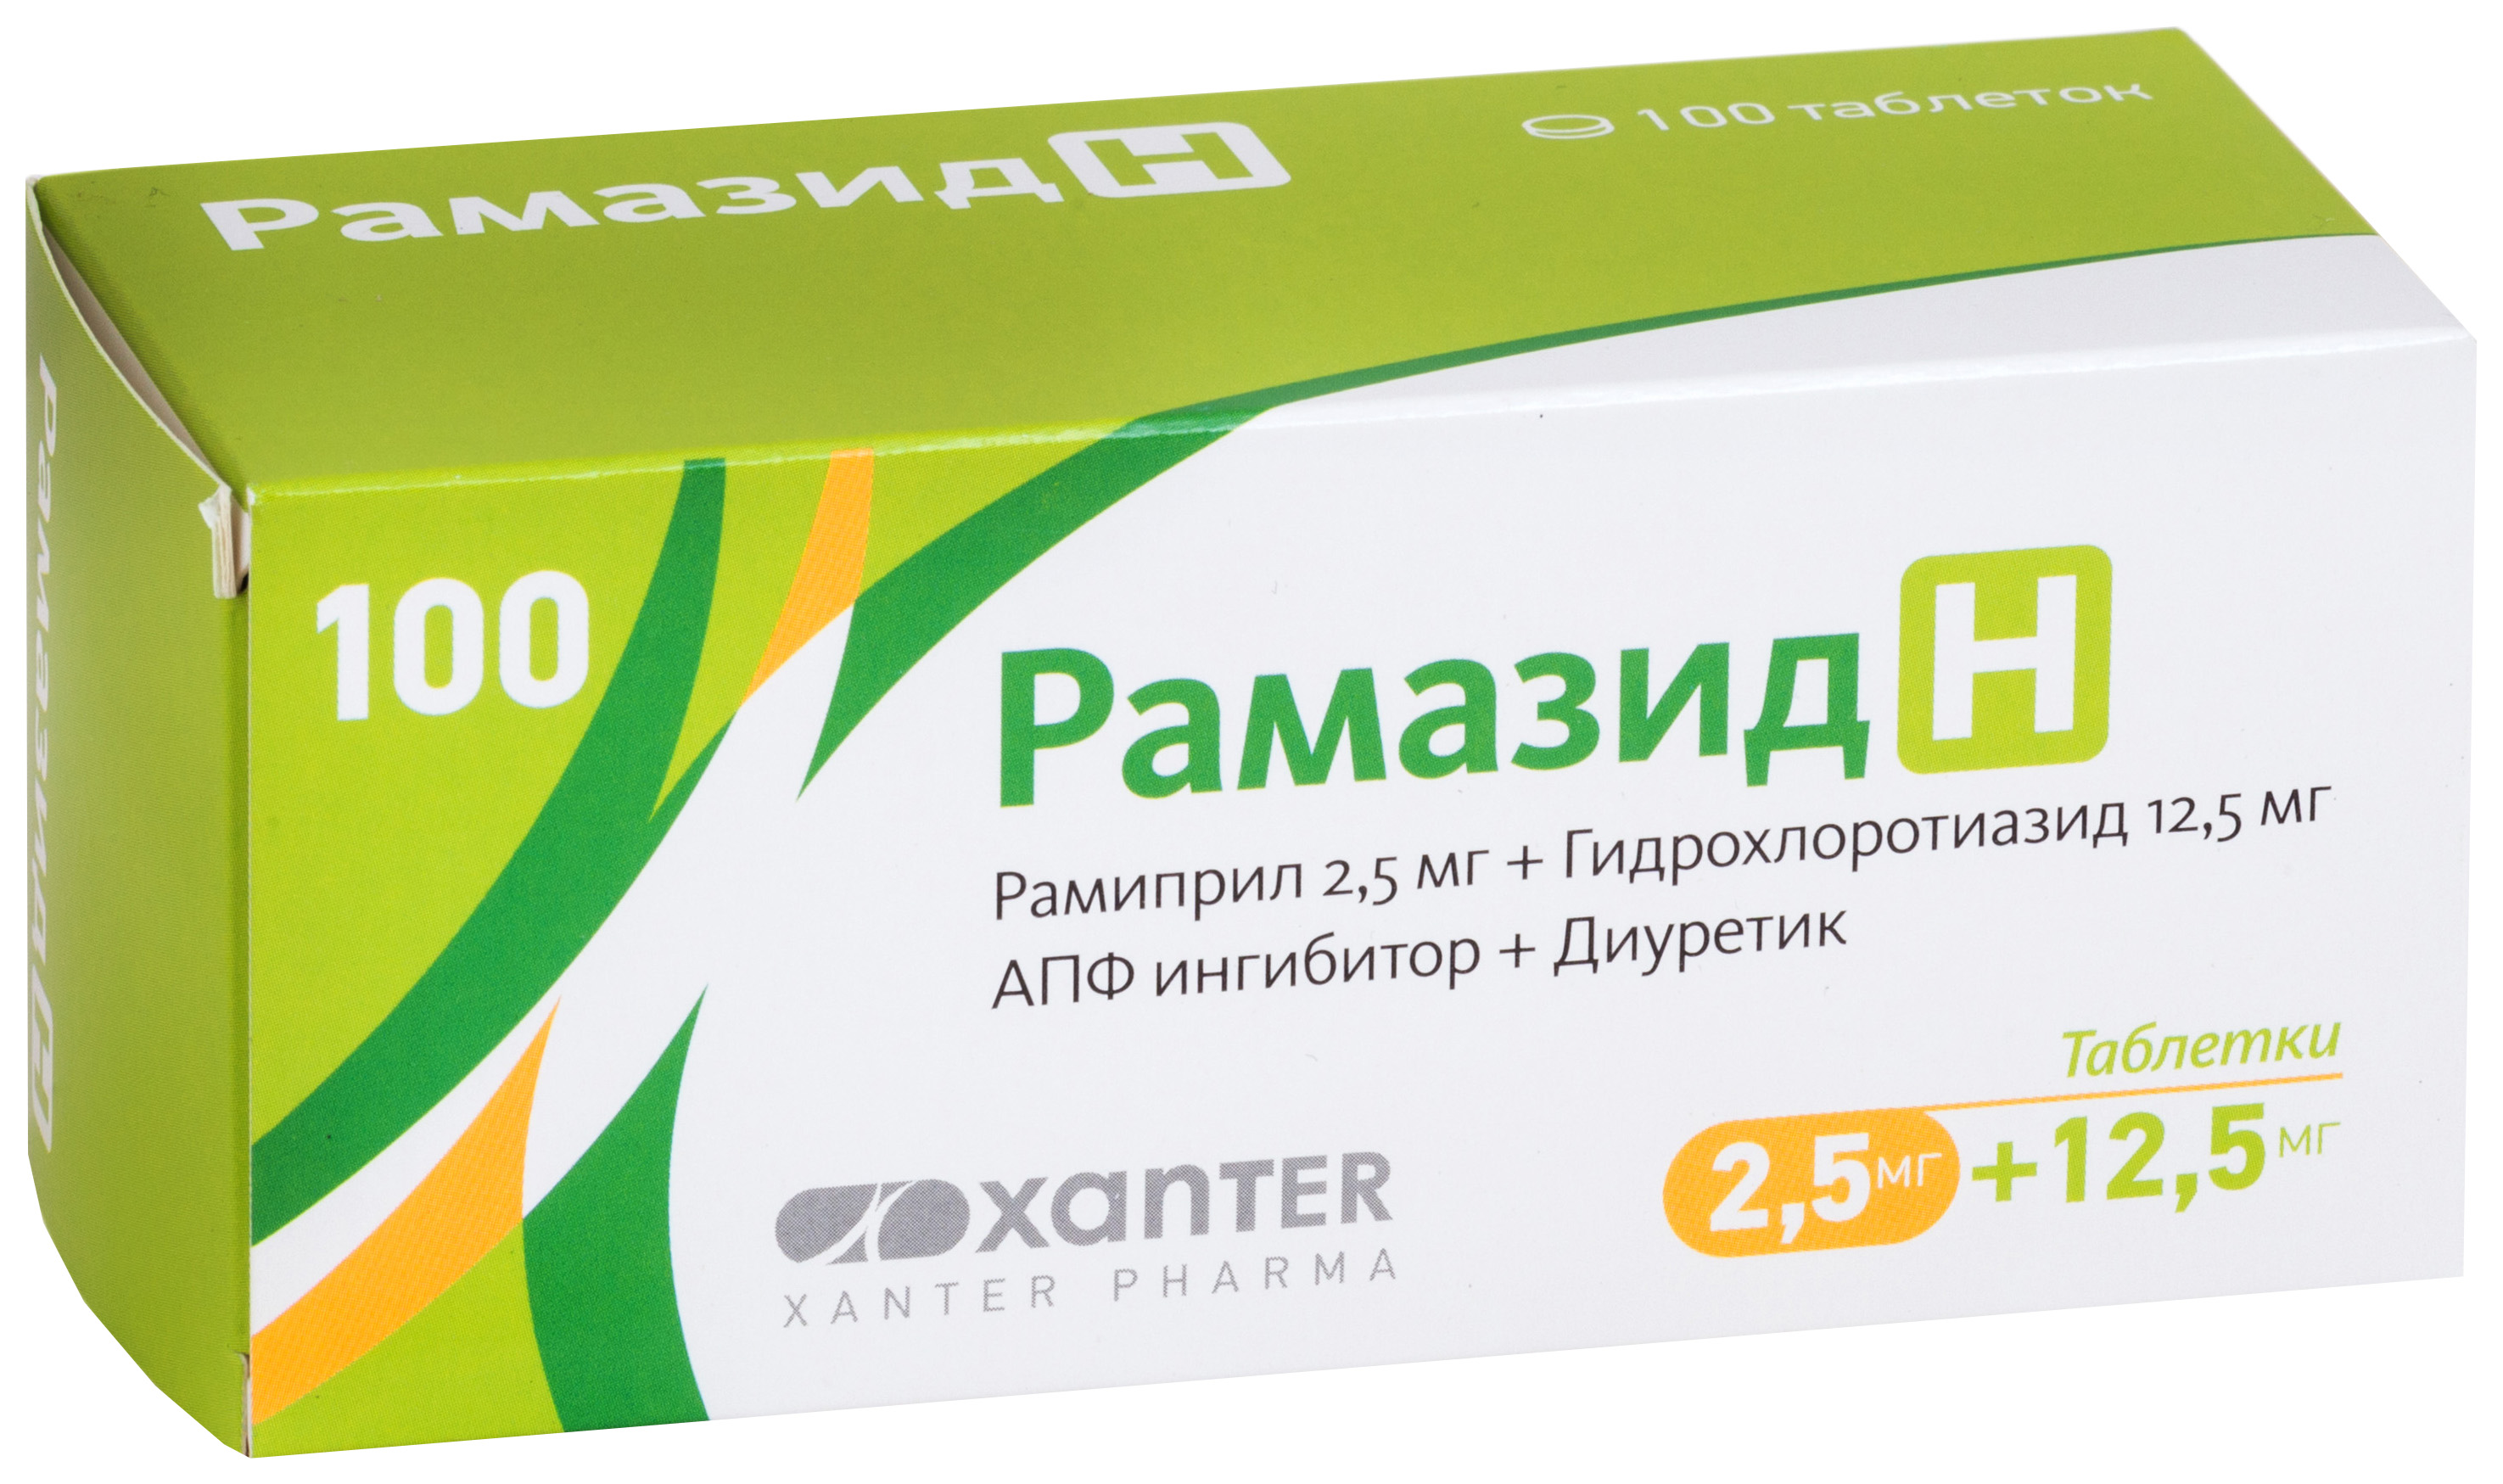 Купить Рамазид Н таблетки 2, 5 мг+12, 5 мг 100 шт., Allergan